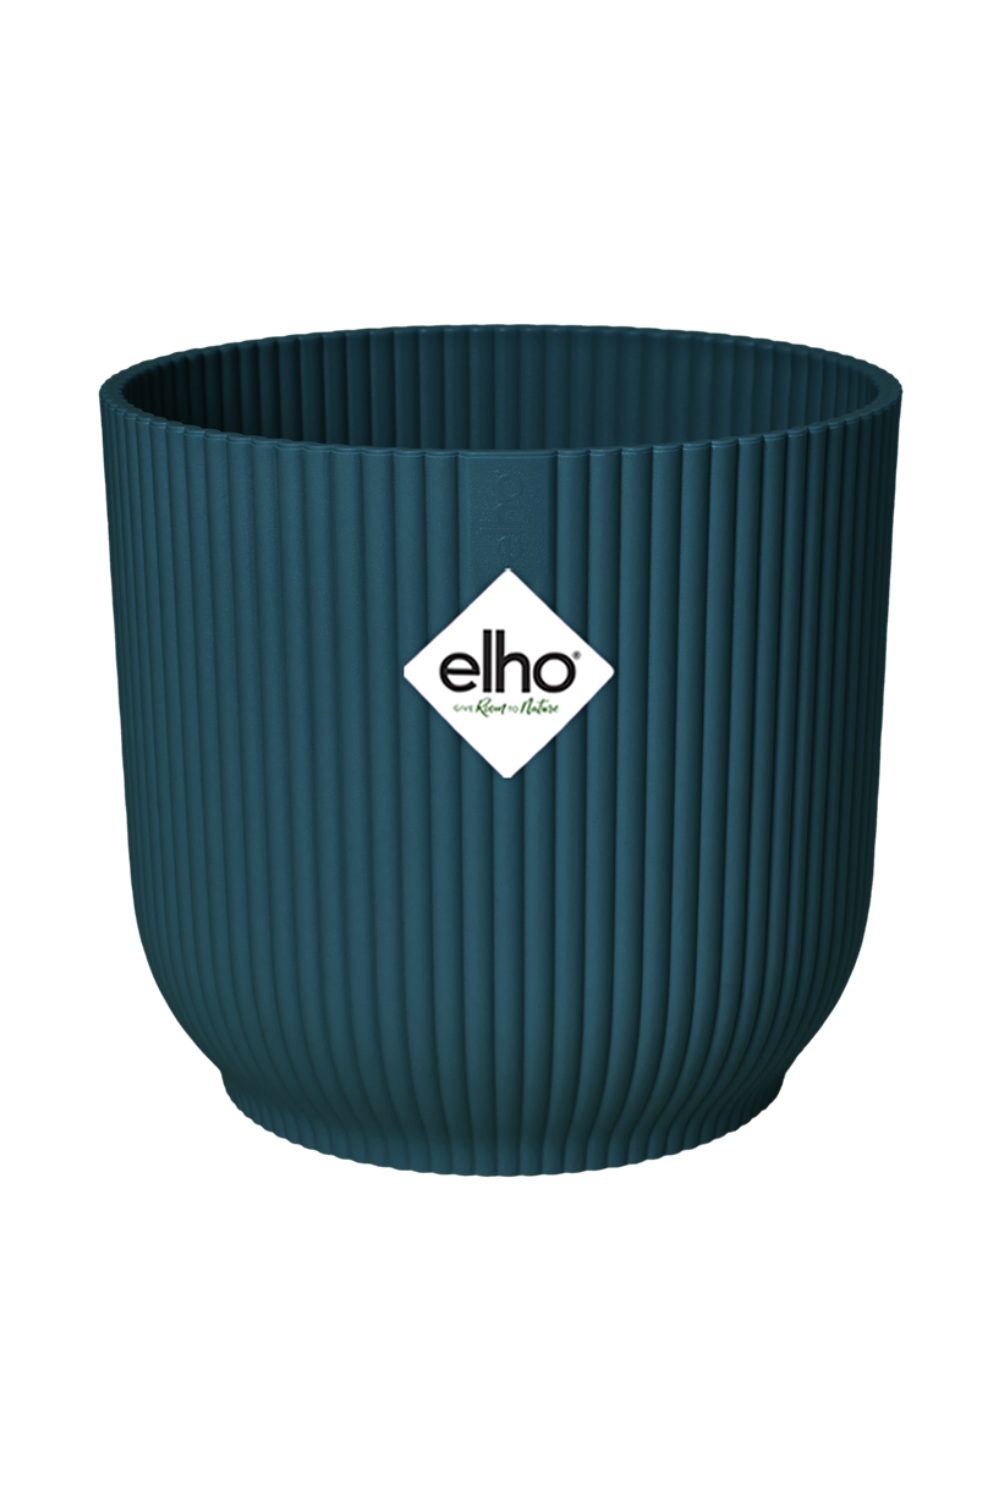 Blumentopf Elho Vibes Fold rund Deep Blue 14cm